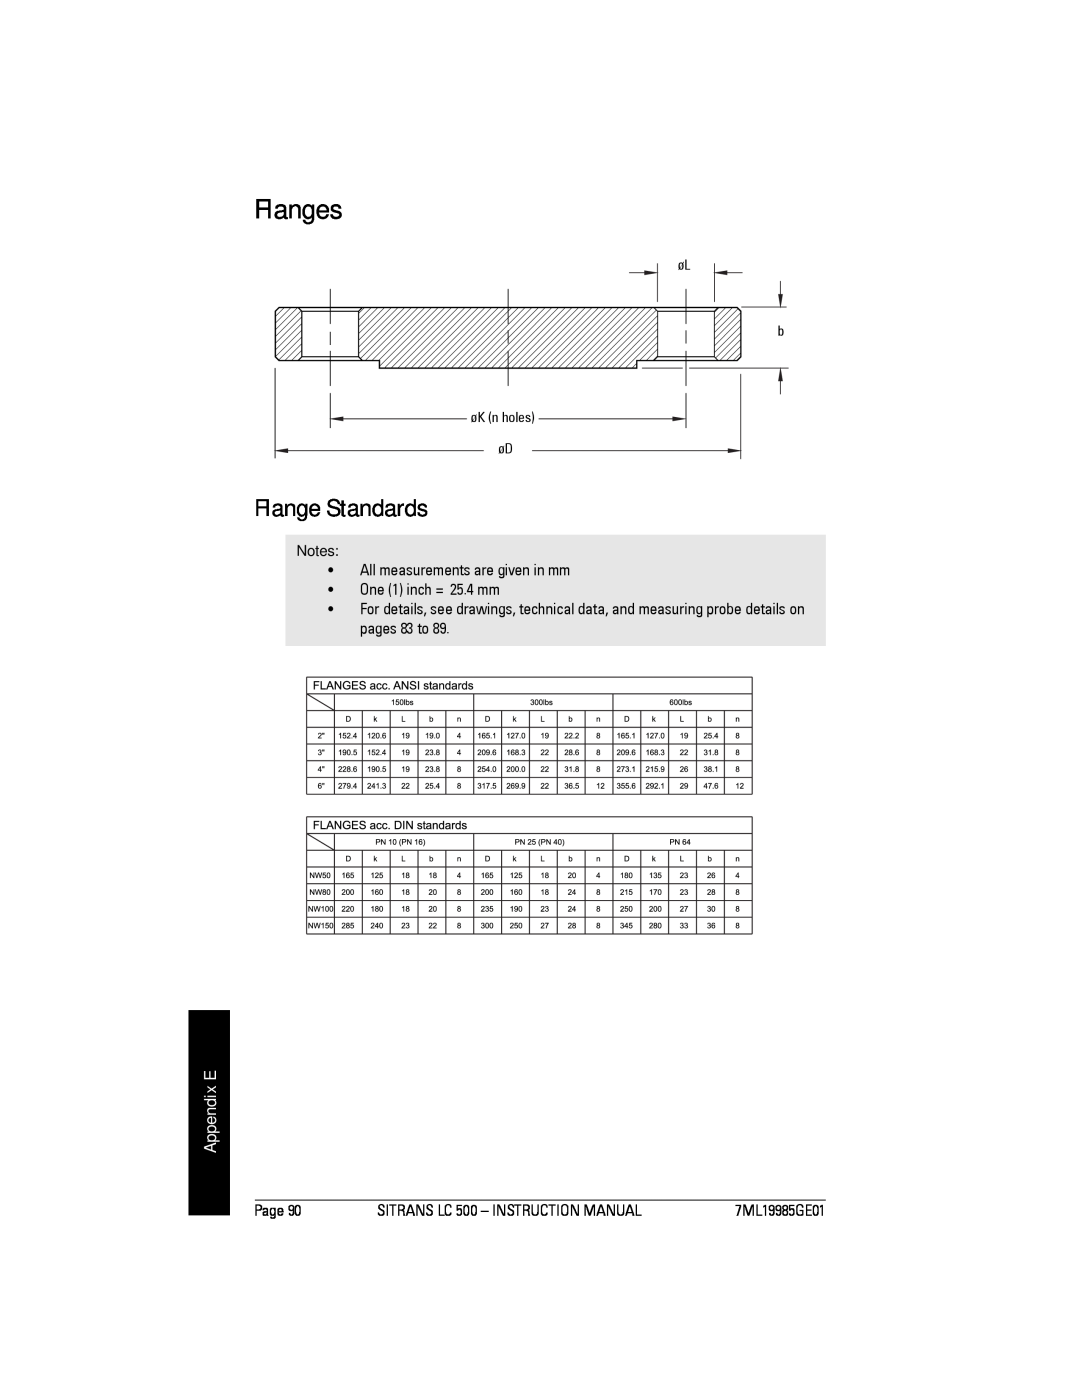 Siemens LC 500, Sitrans instruction manual Flanges, Flange Standards, Appendix E, 7ML19985GE01 